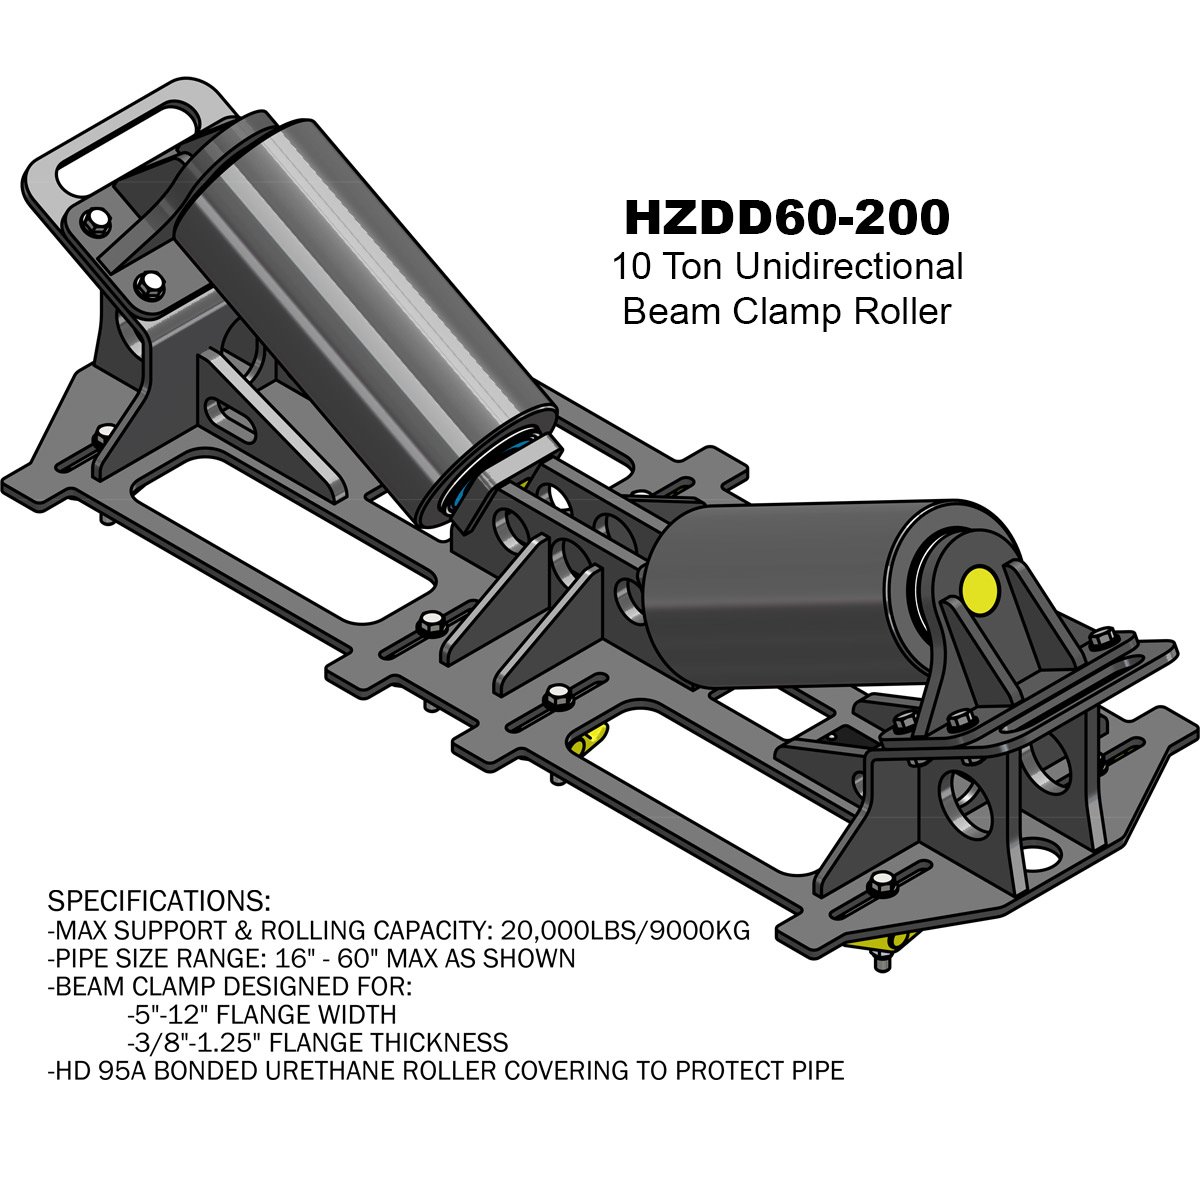 02-MAG-HZDD60-200-1200sq